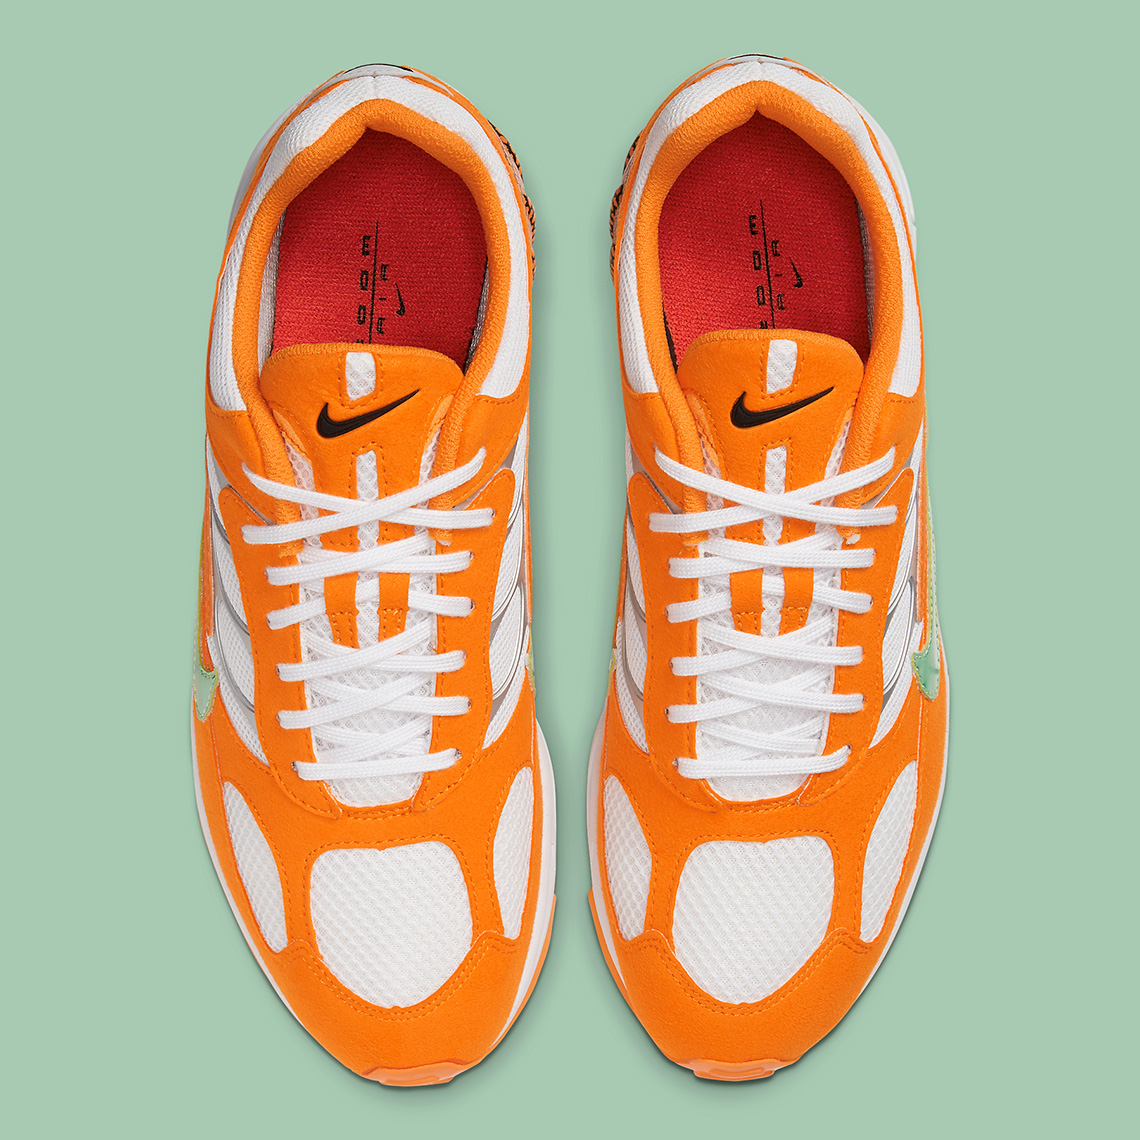 Profecía Murciélago Fácil Nike Air Ghost Racer Orange Peel AT5410-800 Release Info | SneakerNews.com